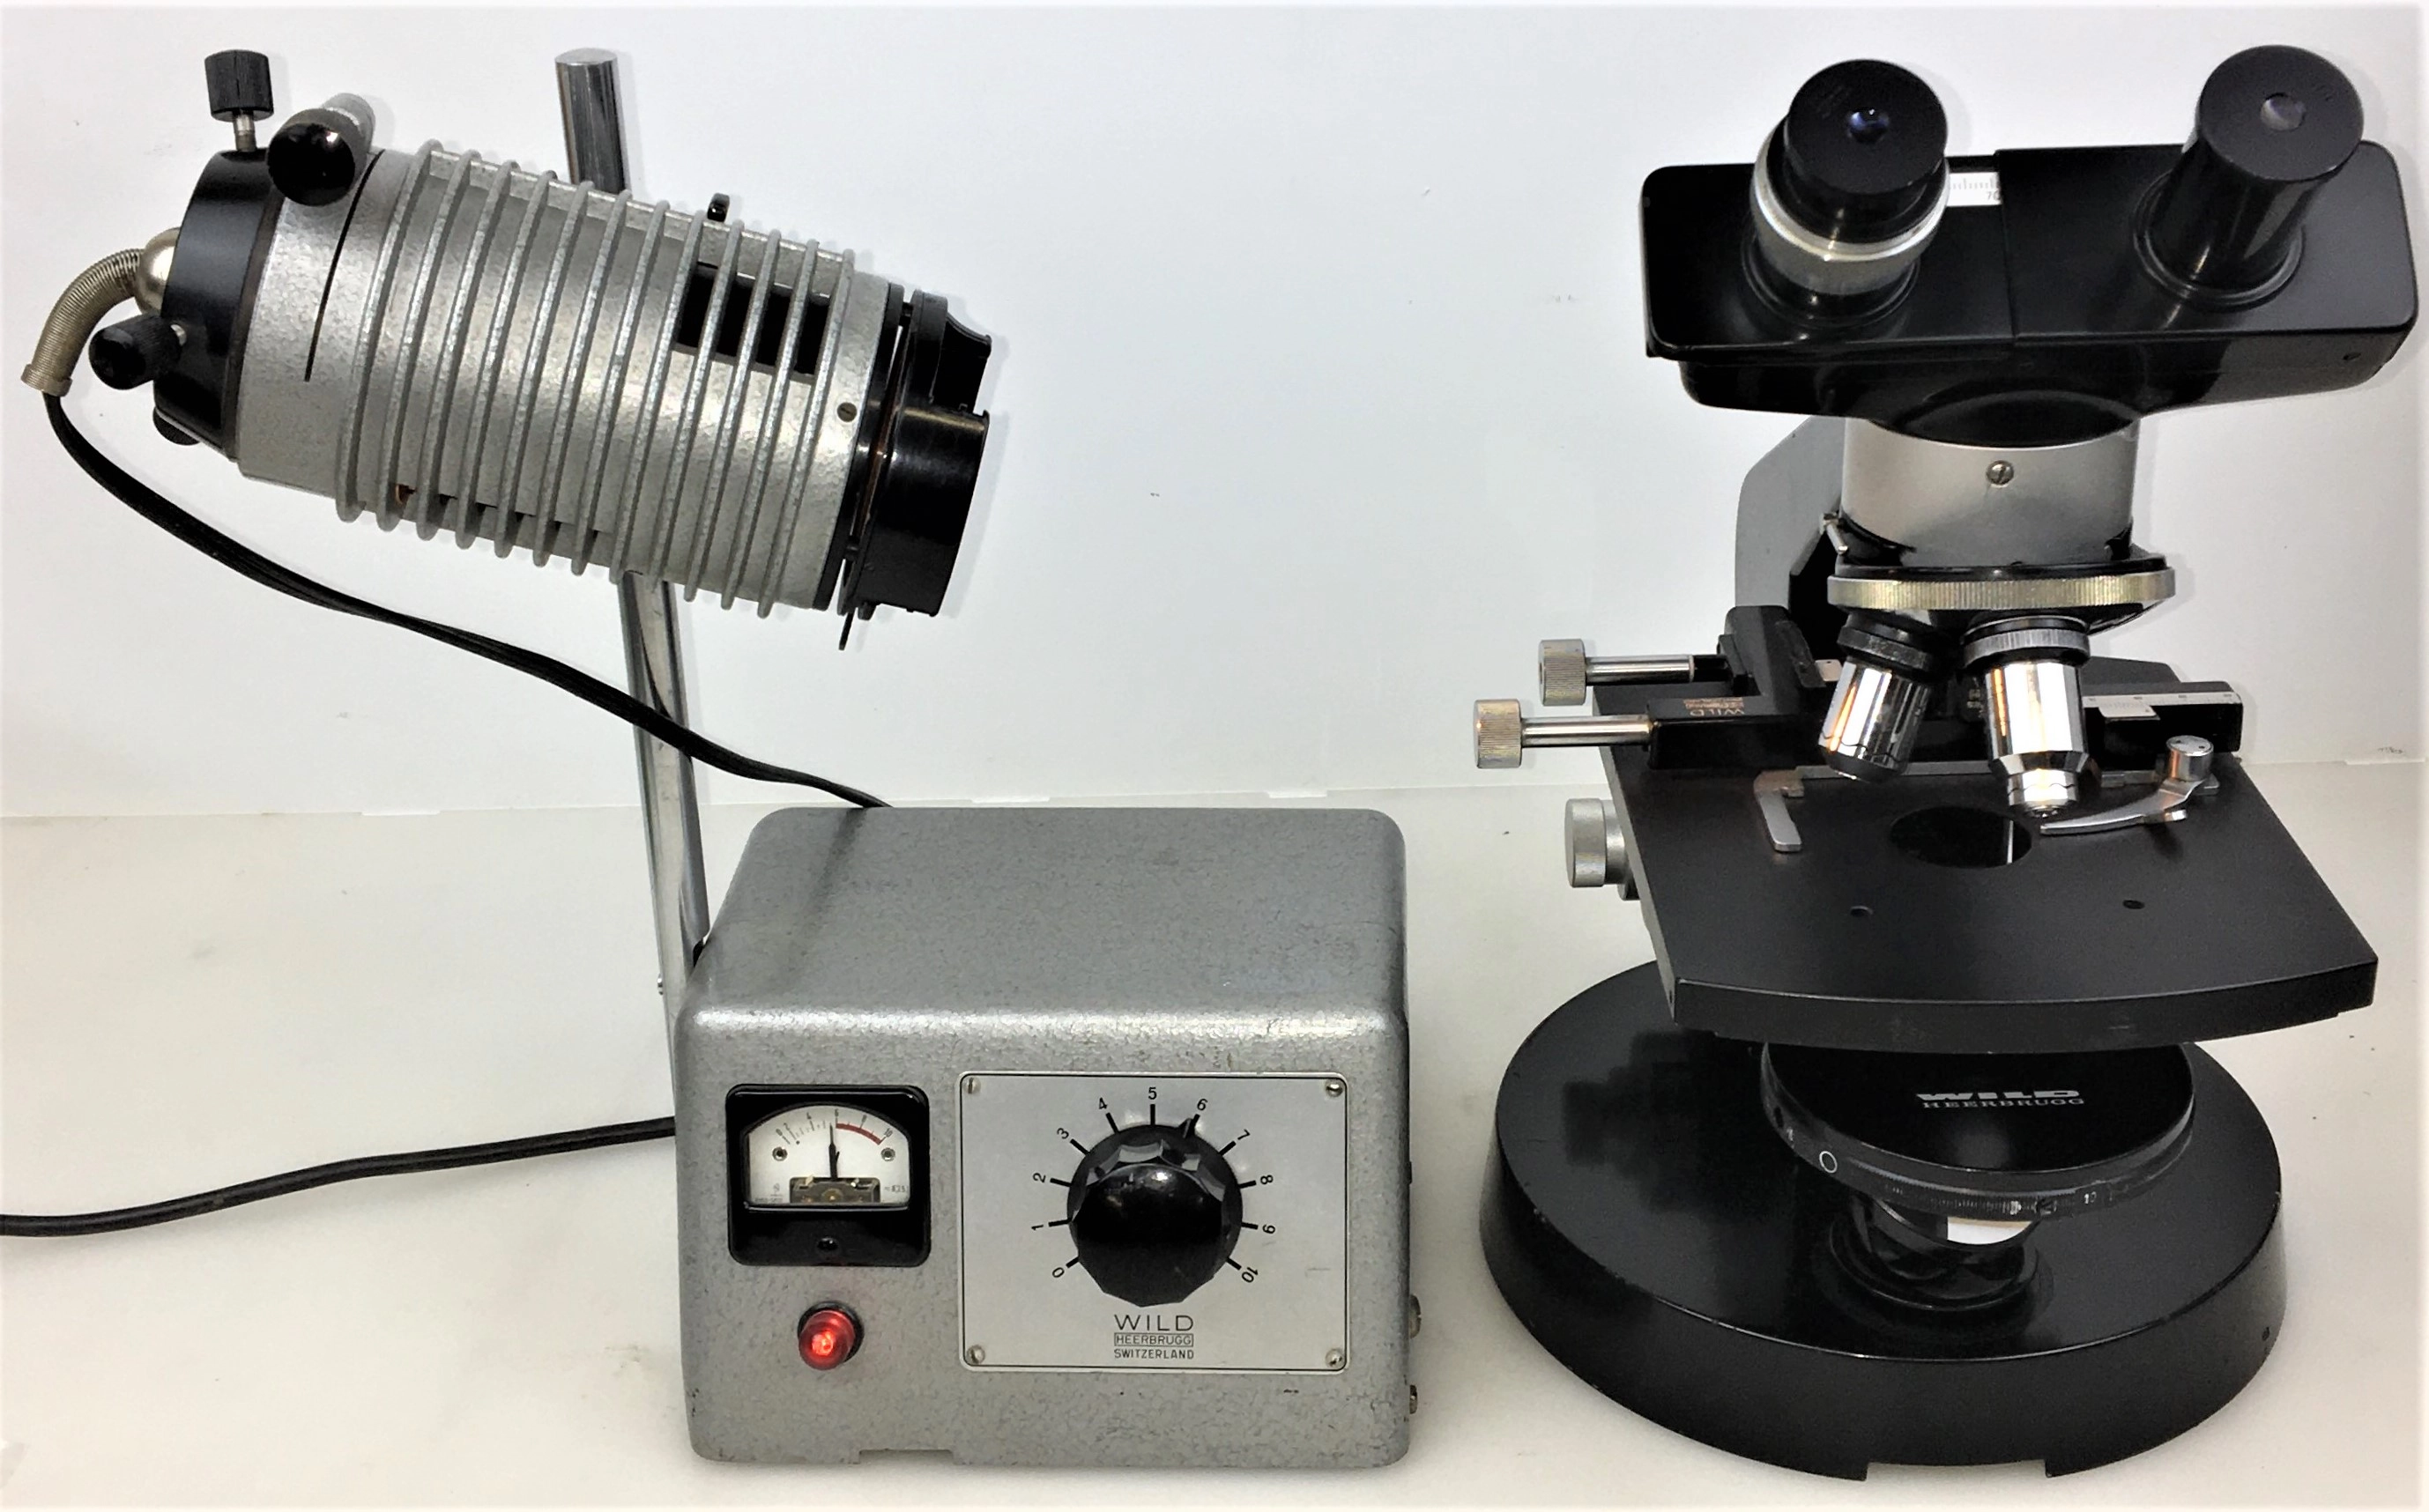 Wild M12 Binocular Phase-Contrast Microscope with Illuminator - 40X to 400X